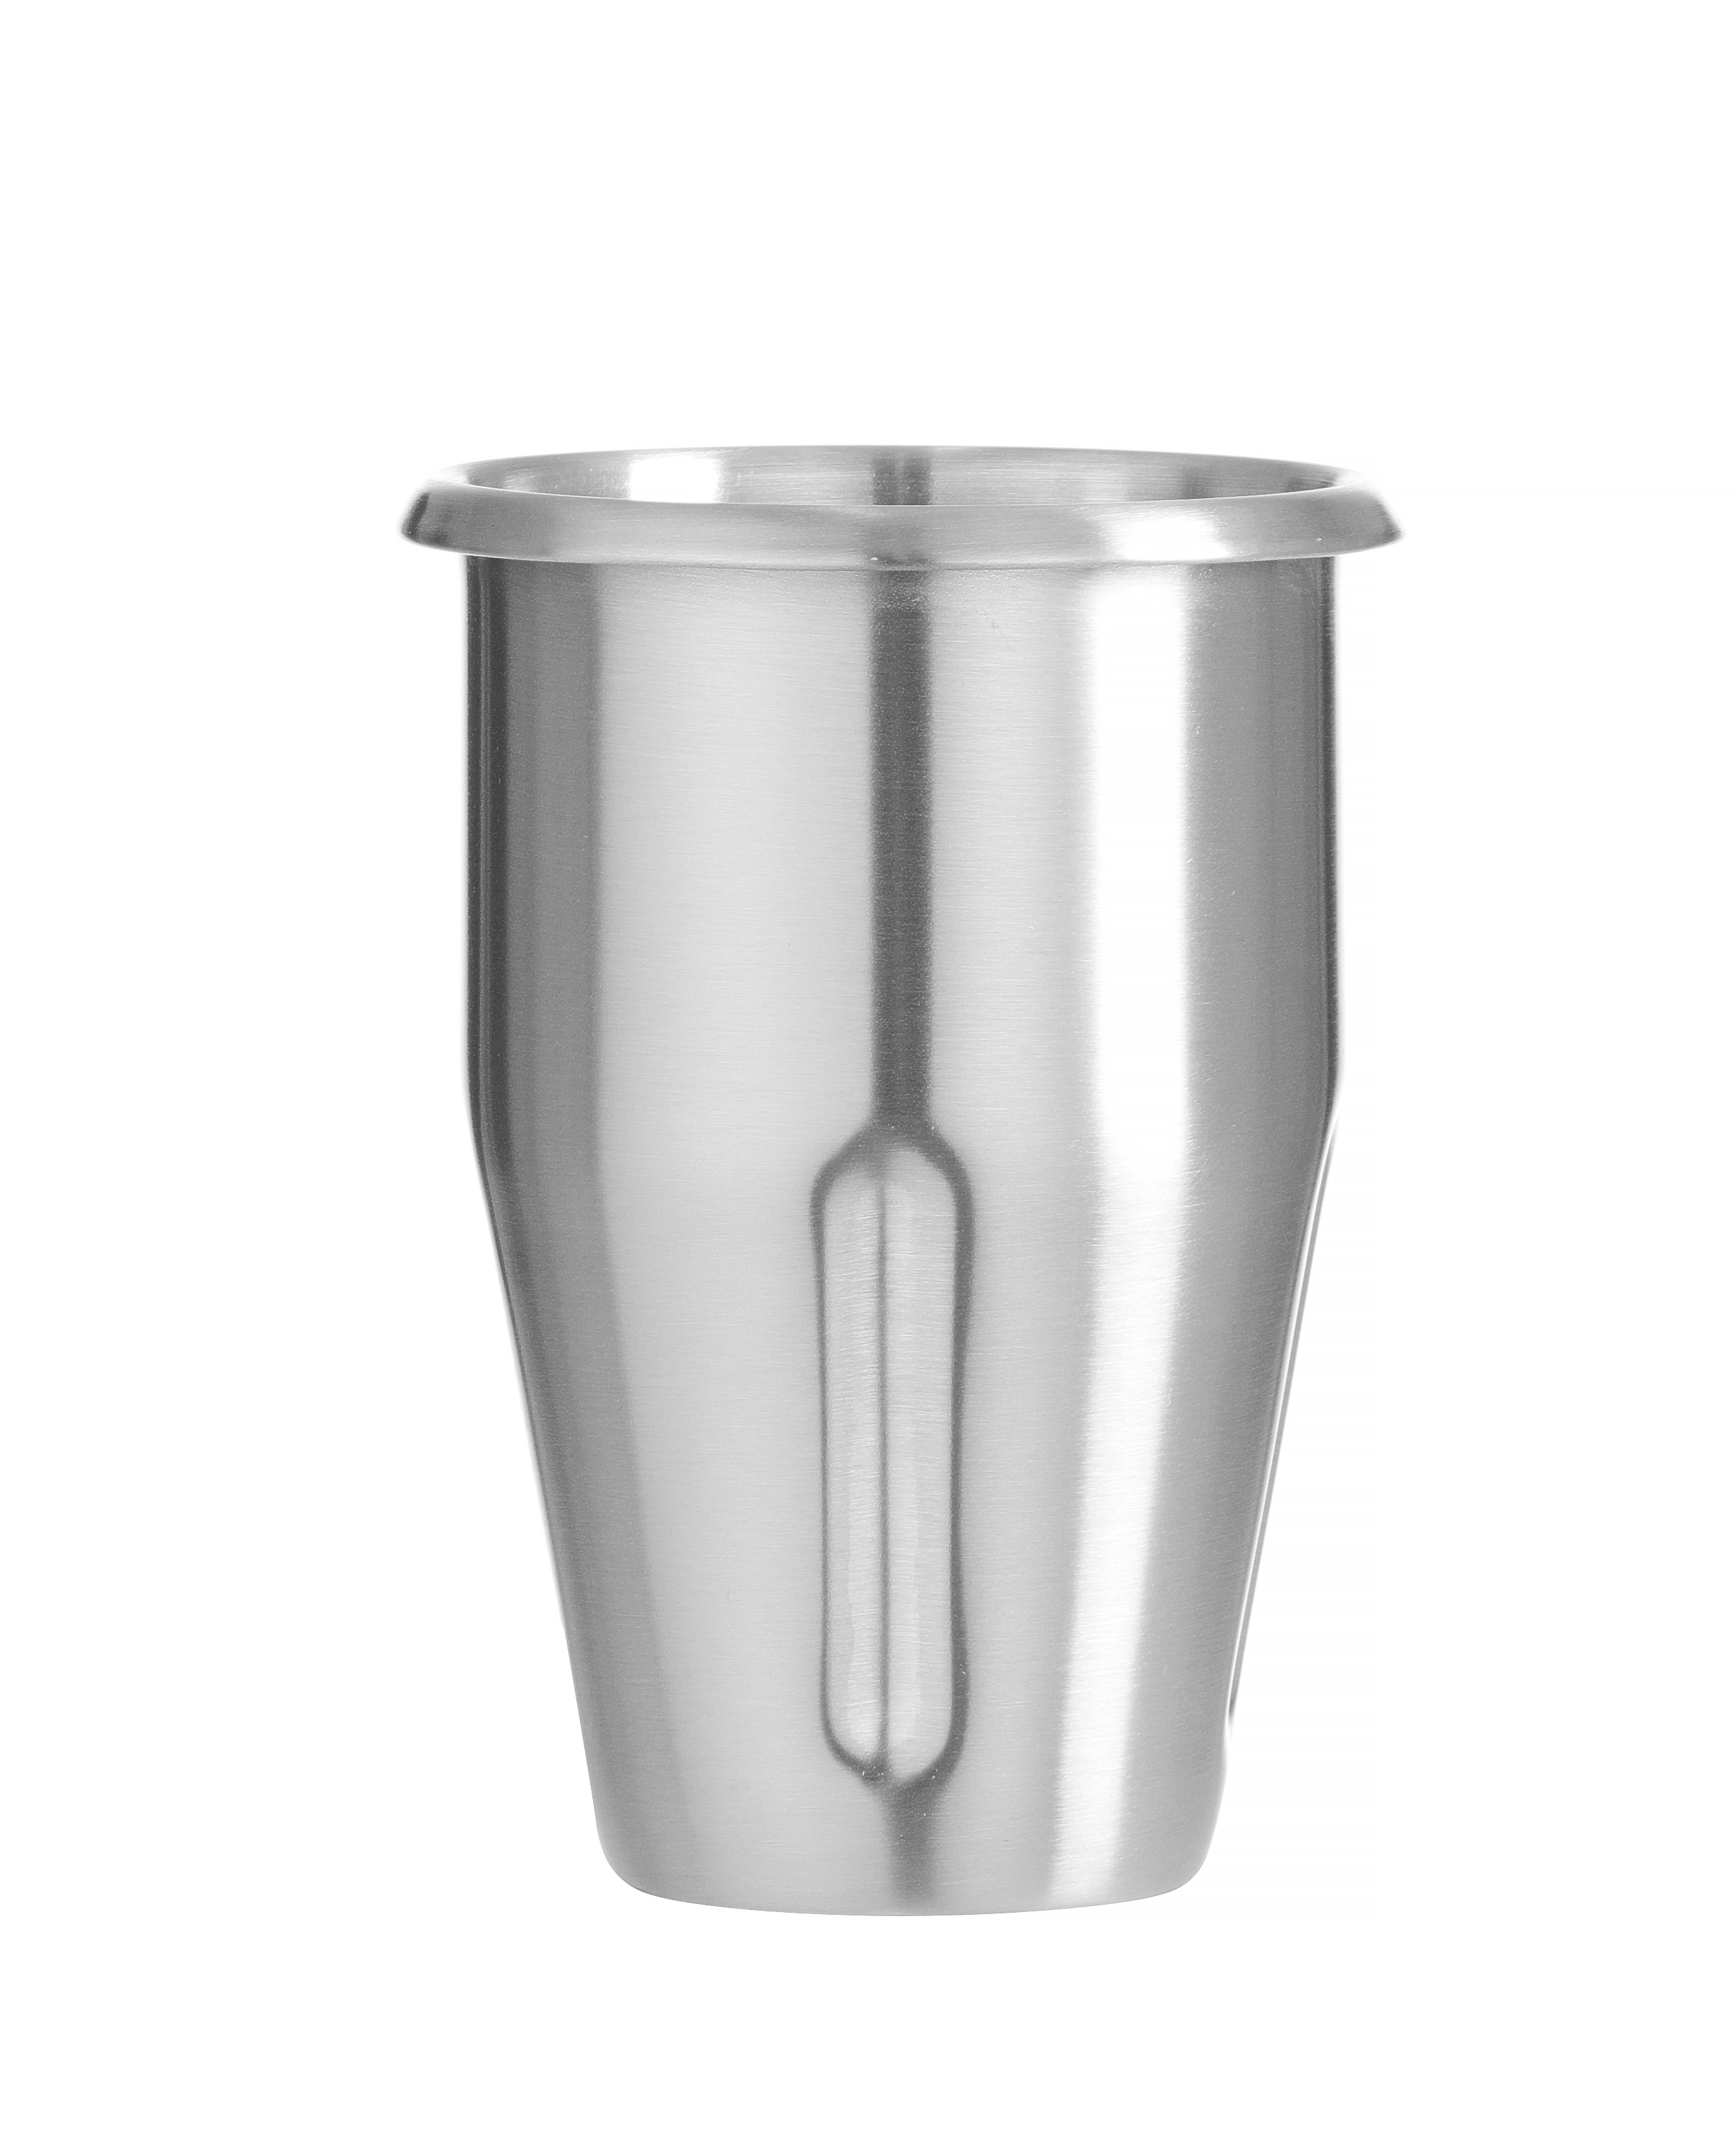 Milkshake mixer BPA Free - Design by Bronwasser - HENDI Tools for Chefs